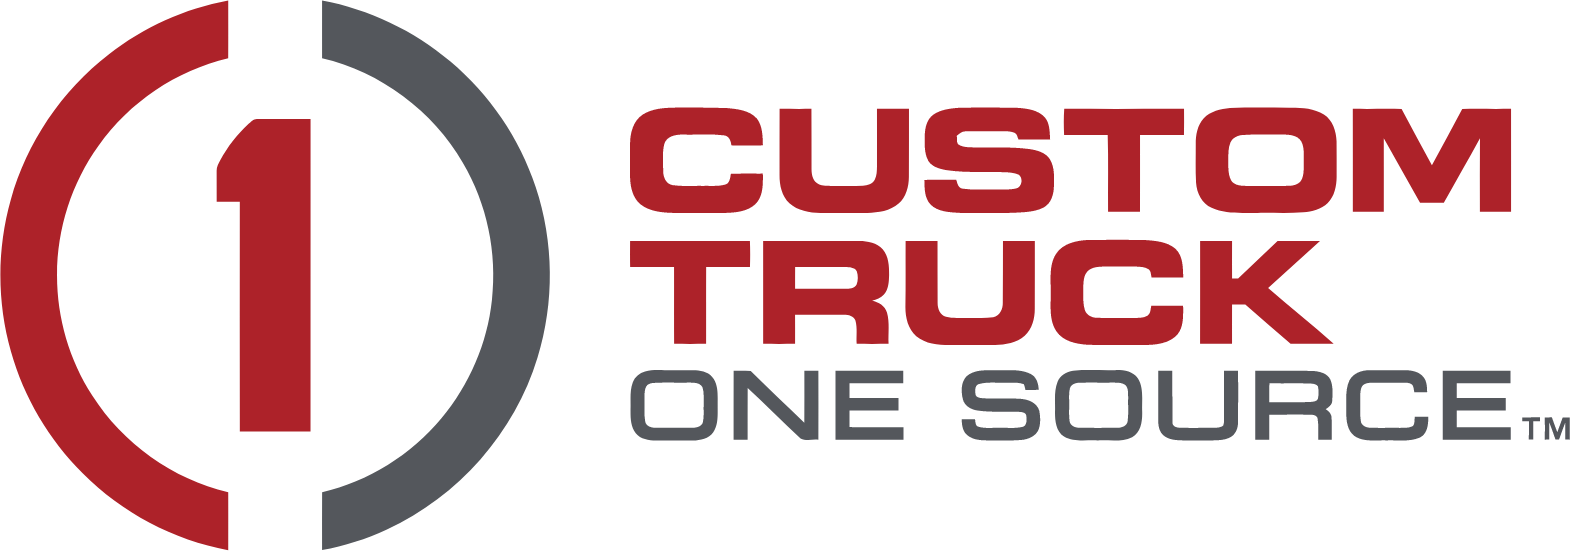 Custom Truck One Source logo large (transparent PNG)